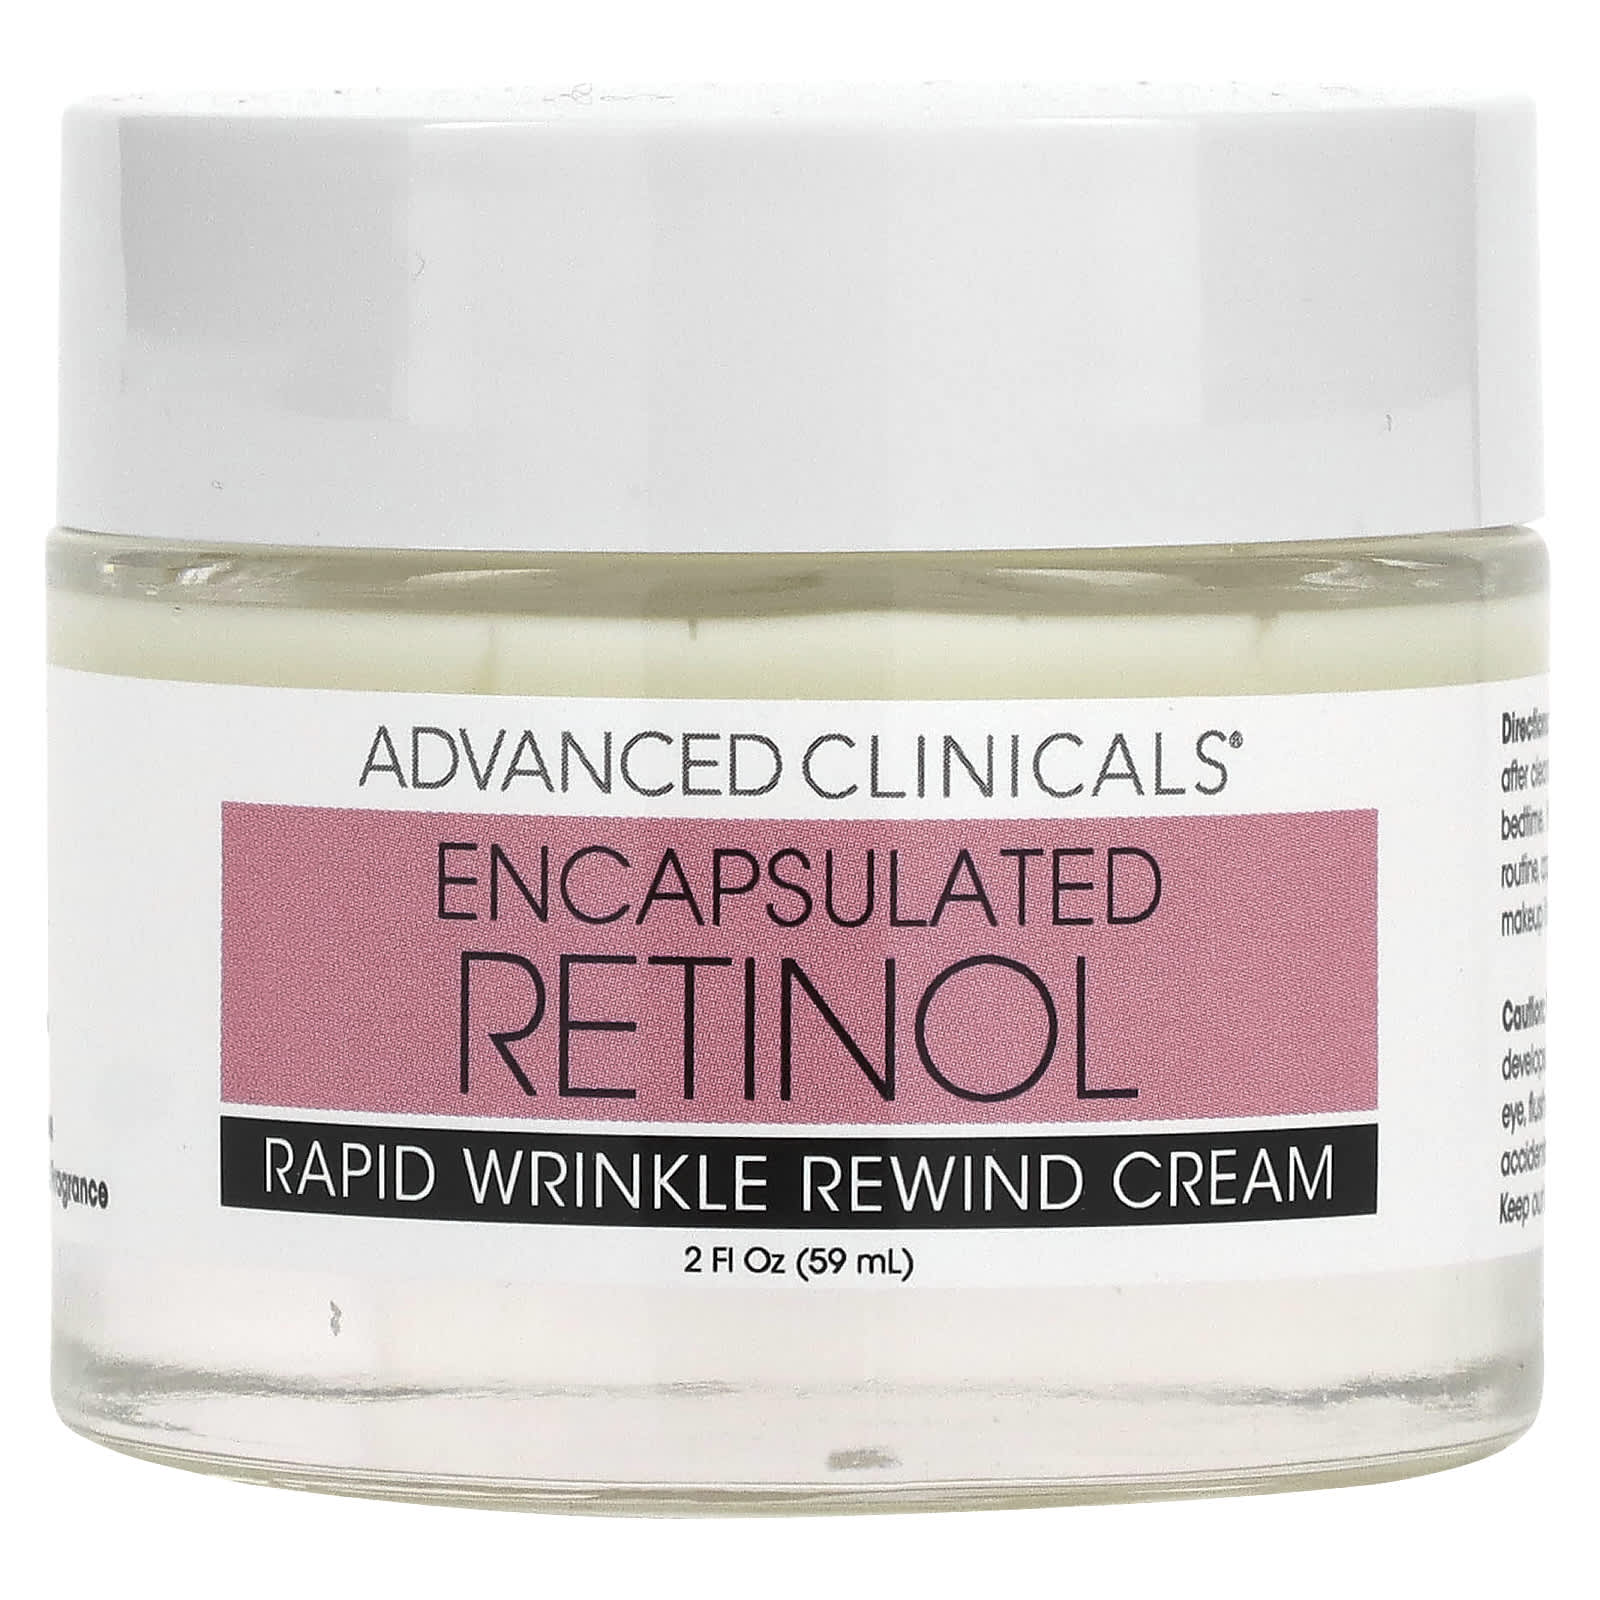 Encapsulated Retinol, Rapid Wrinkle Rewind Cream, Fragrance Free, 2 fl oz (59 ml) Advanced Clinicals advanced clinicals 1000x boost hyaluronic extra dry skin gel cream fragrance free 2 fl oz 59 ml